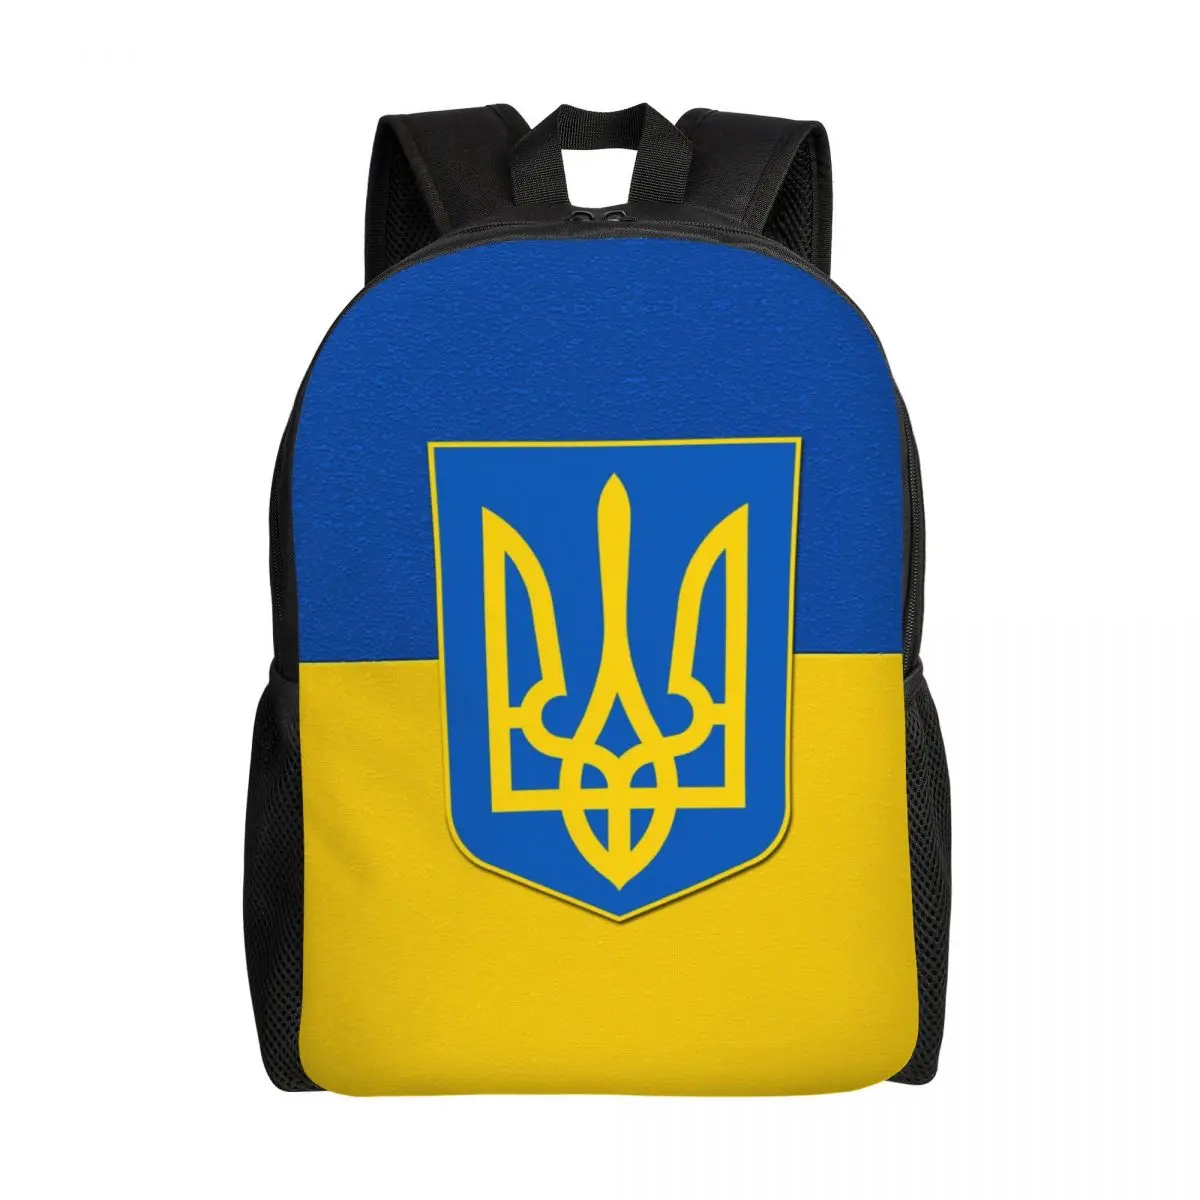 

Ukraine National Flag Backpack Blue Yellow UA UKR Ukrainian Flags Patriotic College School Travel Bag 16 Inch Bookbag for Teens